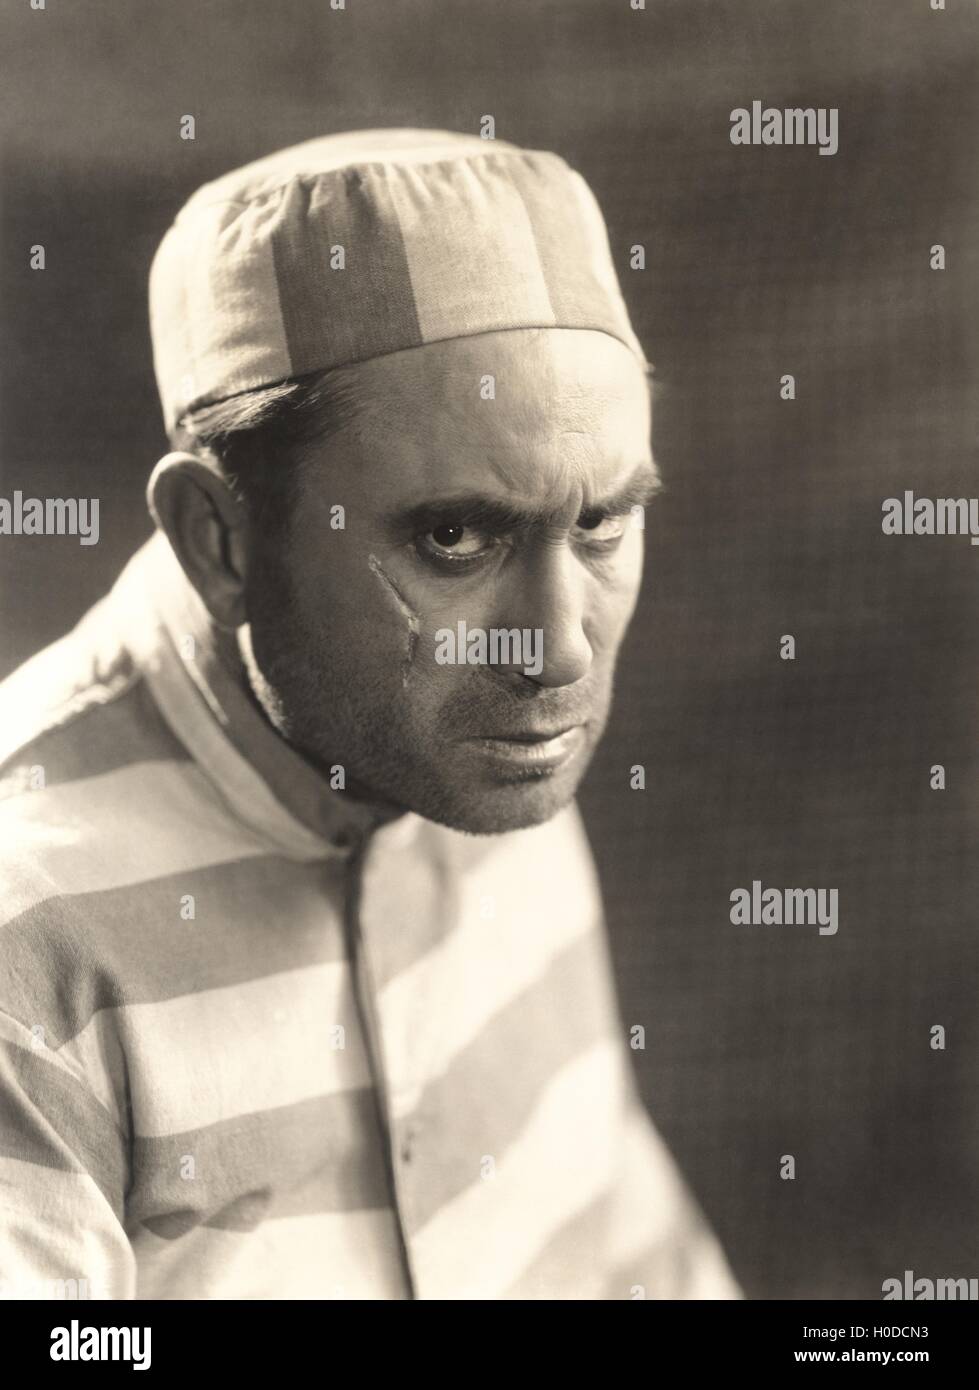 Prisoner with scar Stock Photo